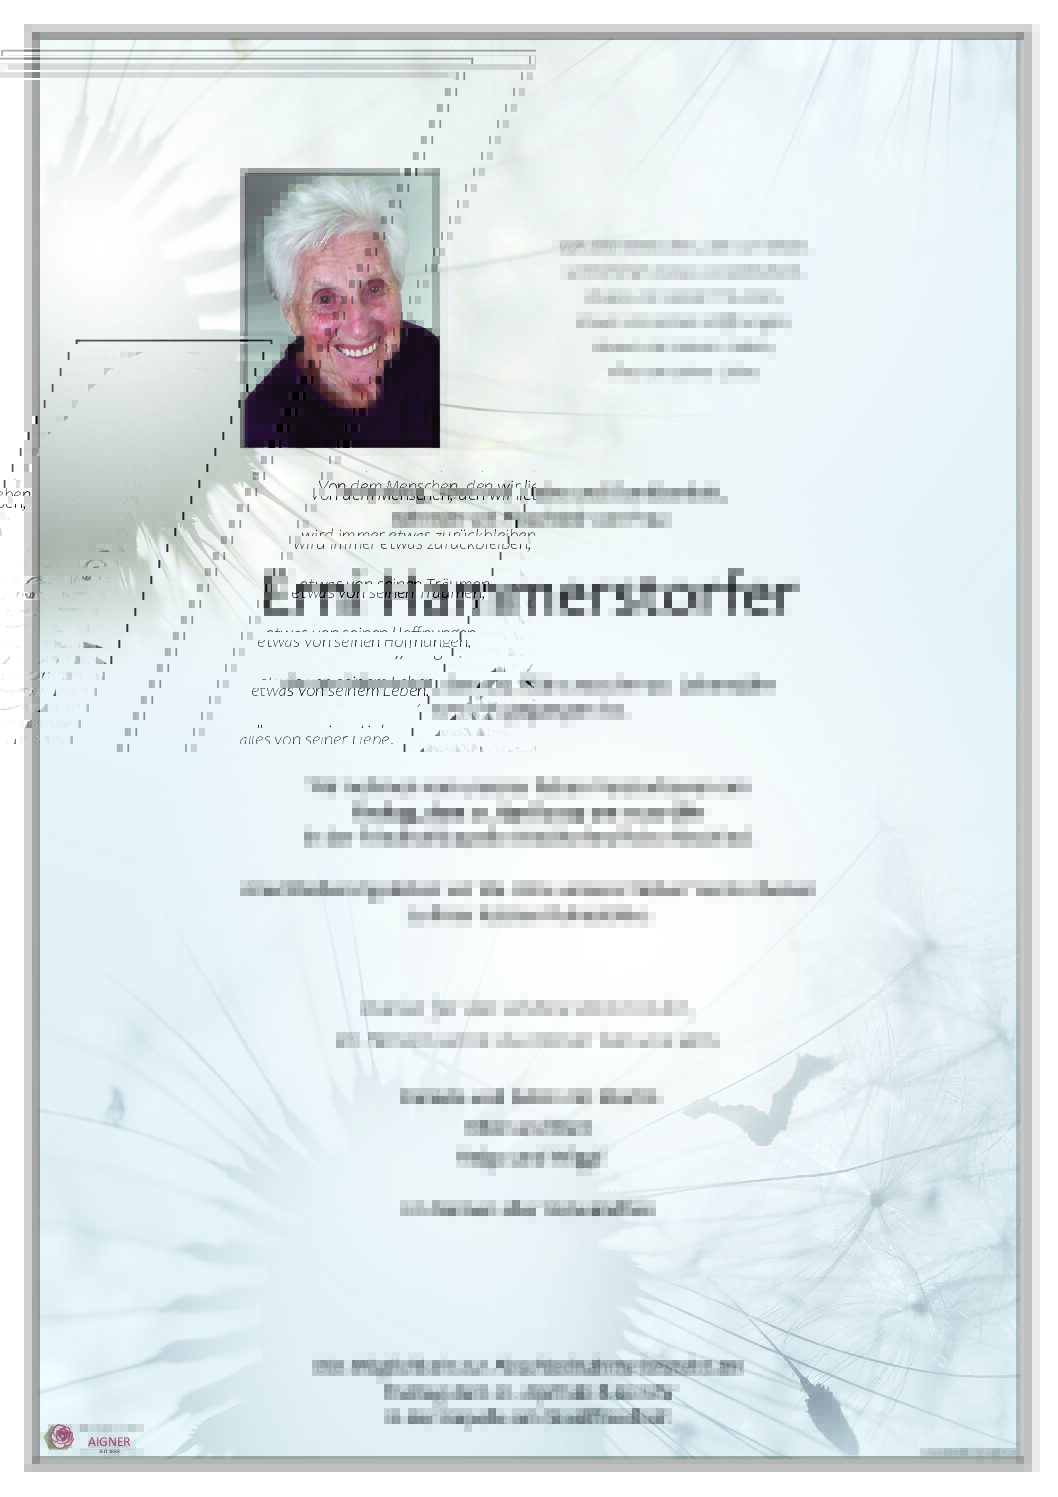 Erni Hammerstorfer